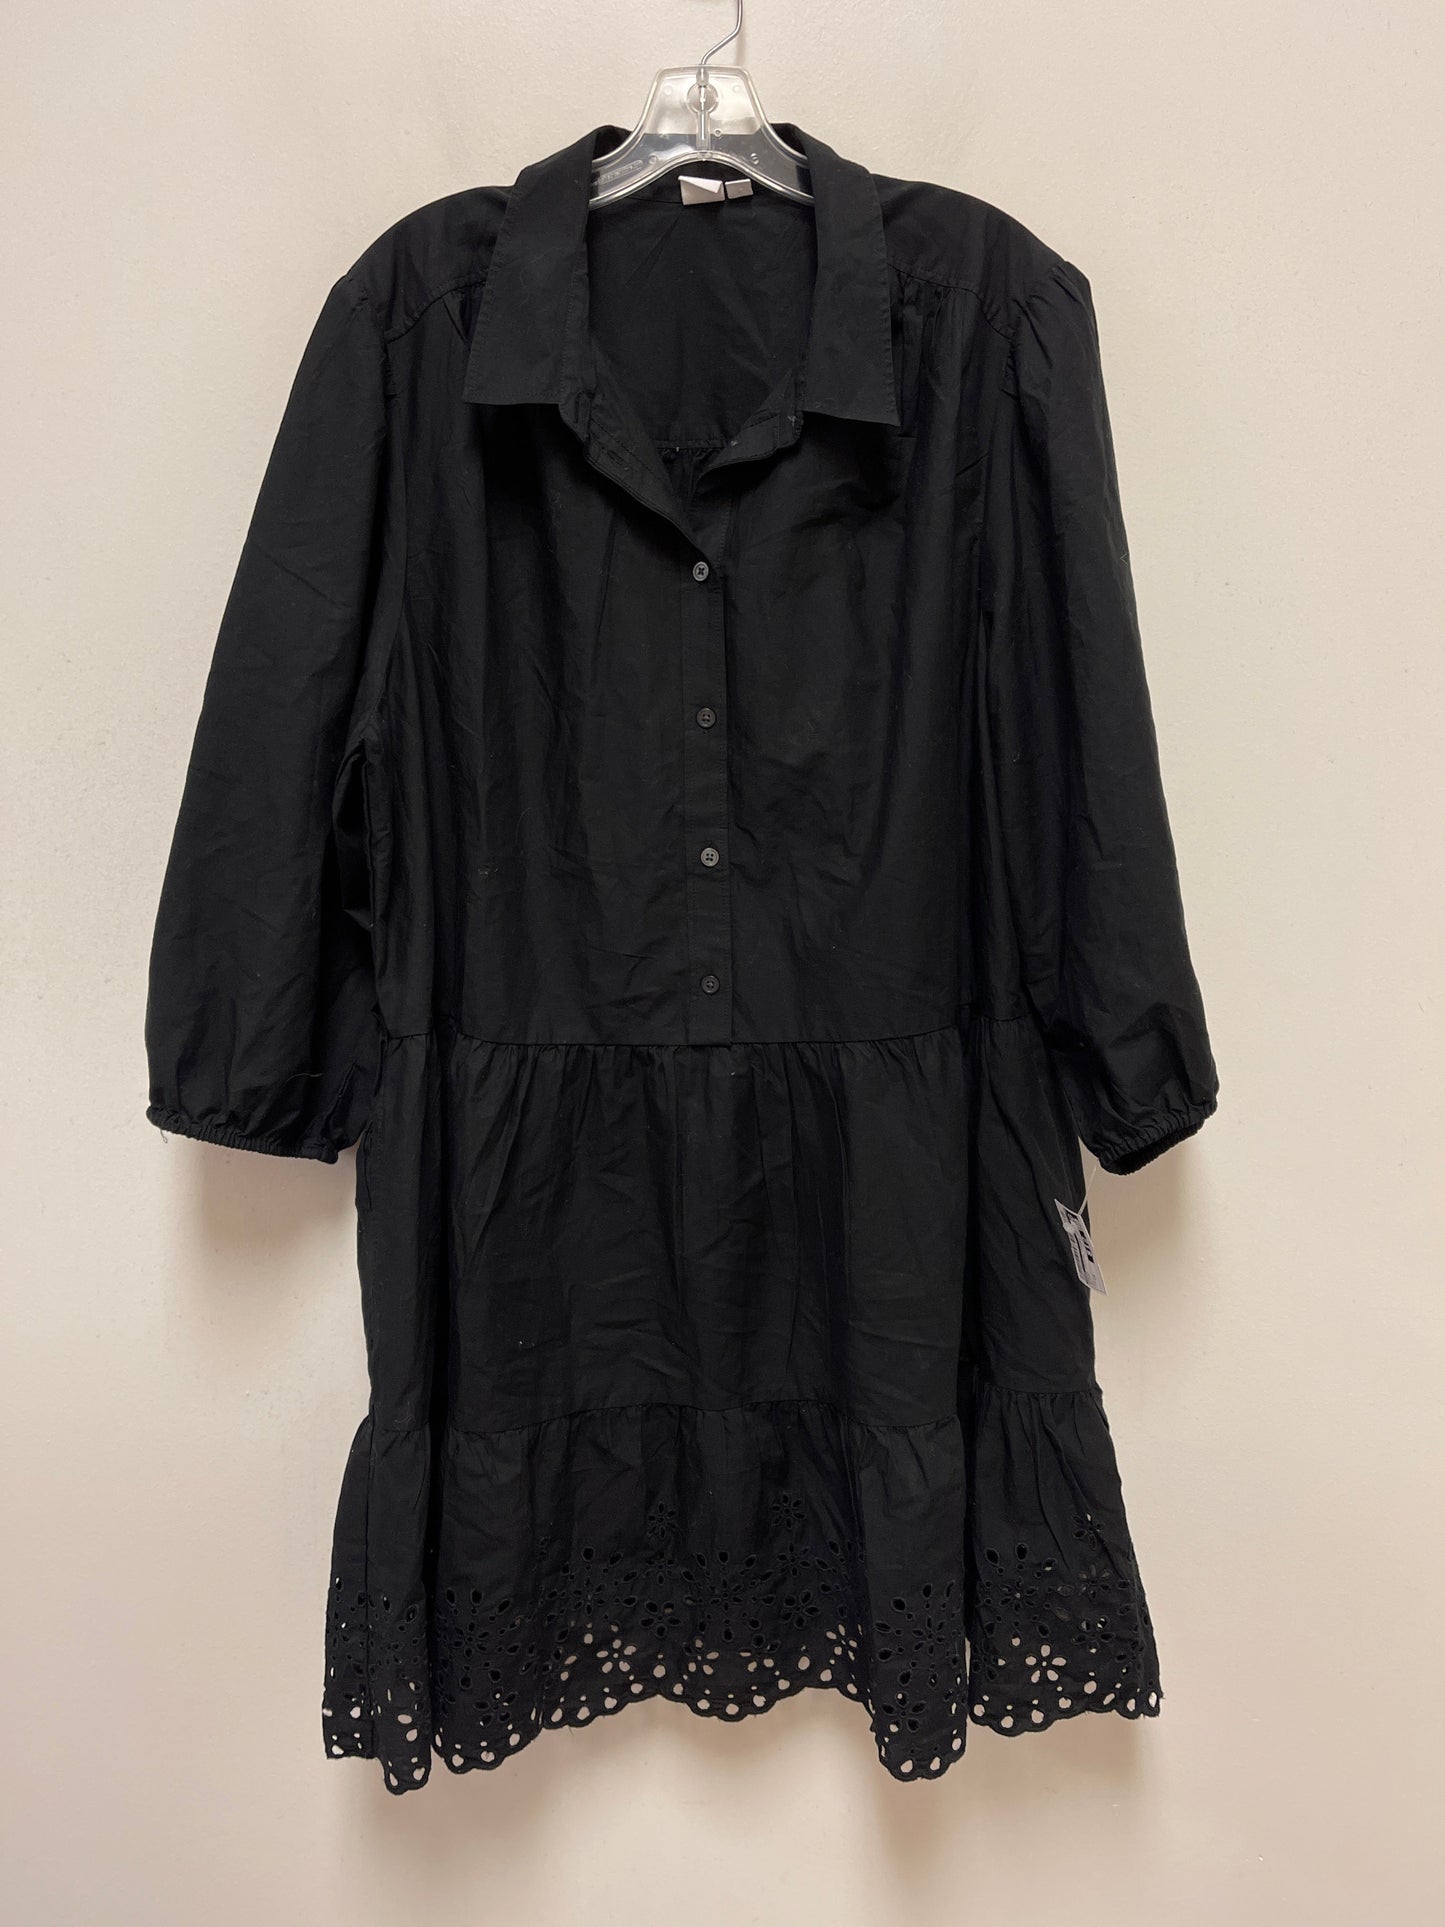 Black Dress Casual Short Gap, Size 2x